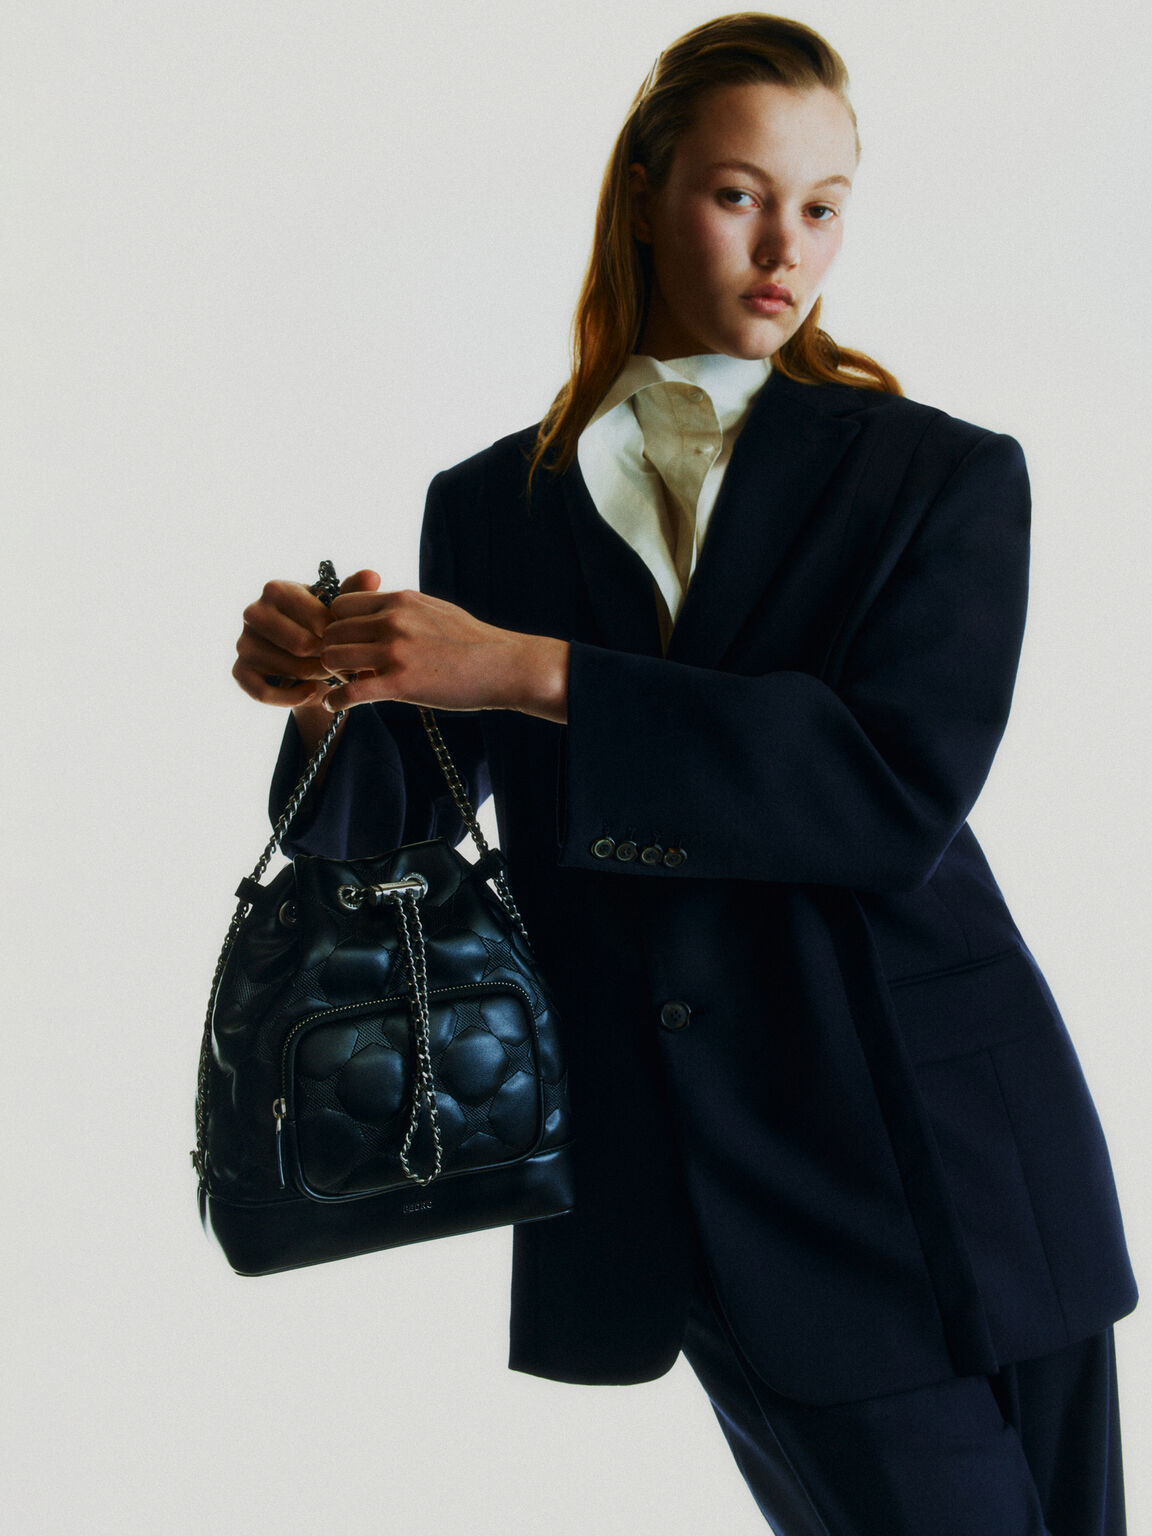 Maisie Bucket Bag, Black, hi-res